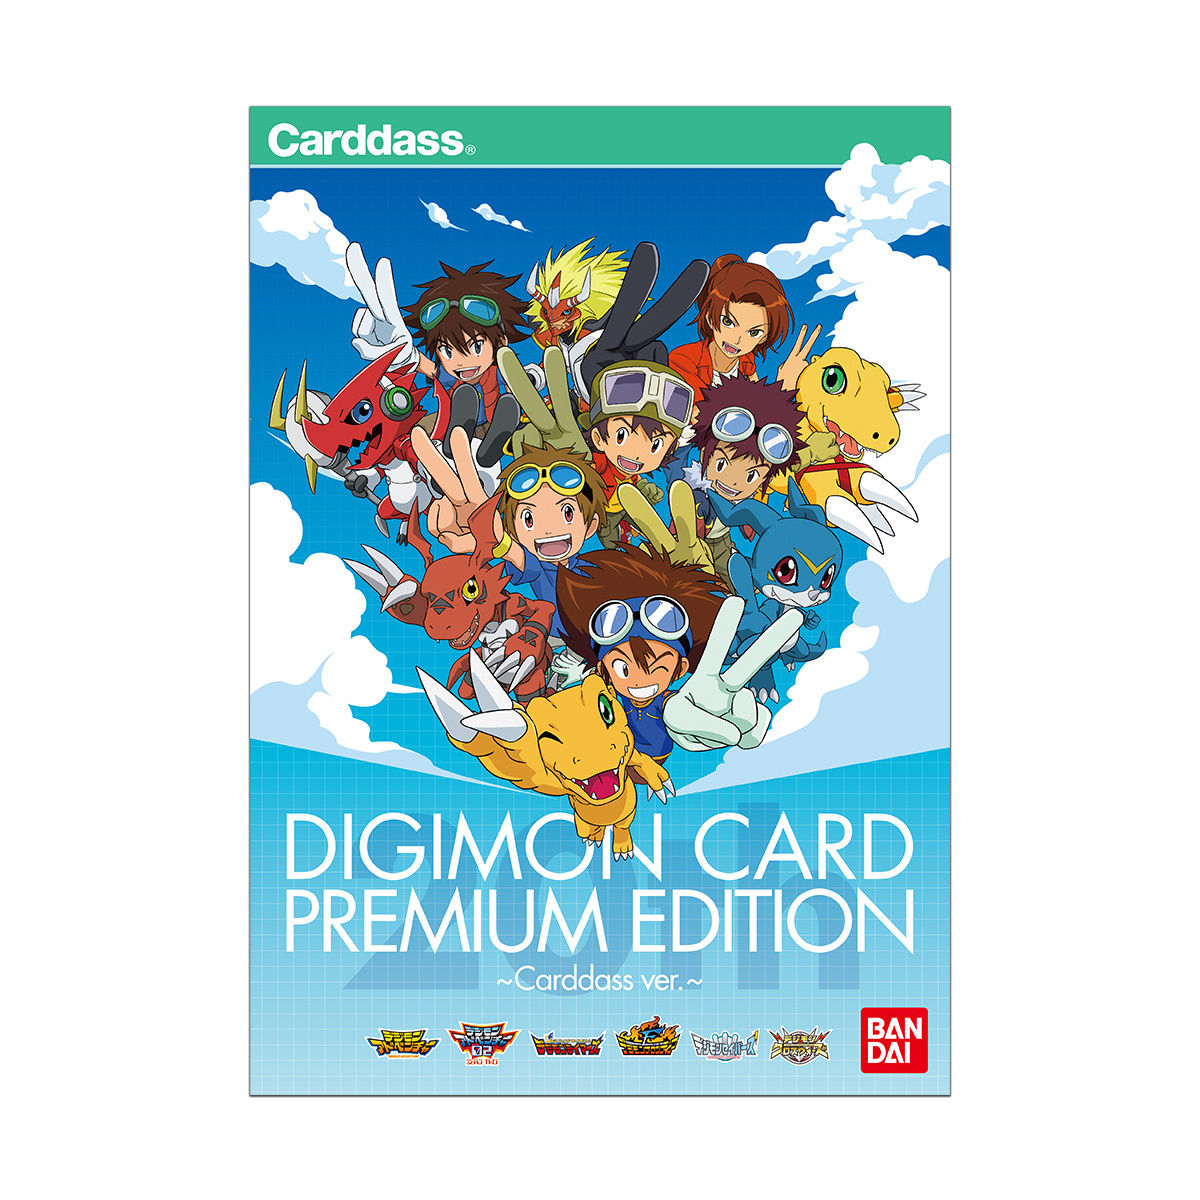 DIGIMON CARD PREMIUM EDITION ~Carddass ver.~